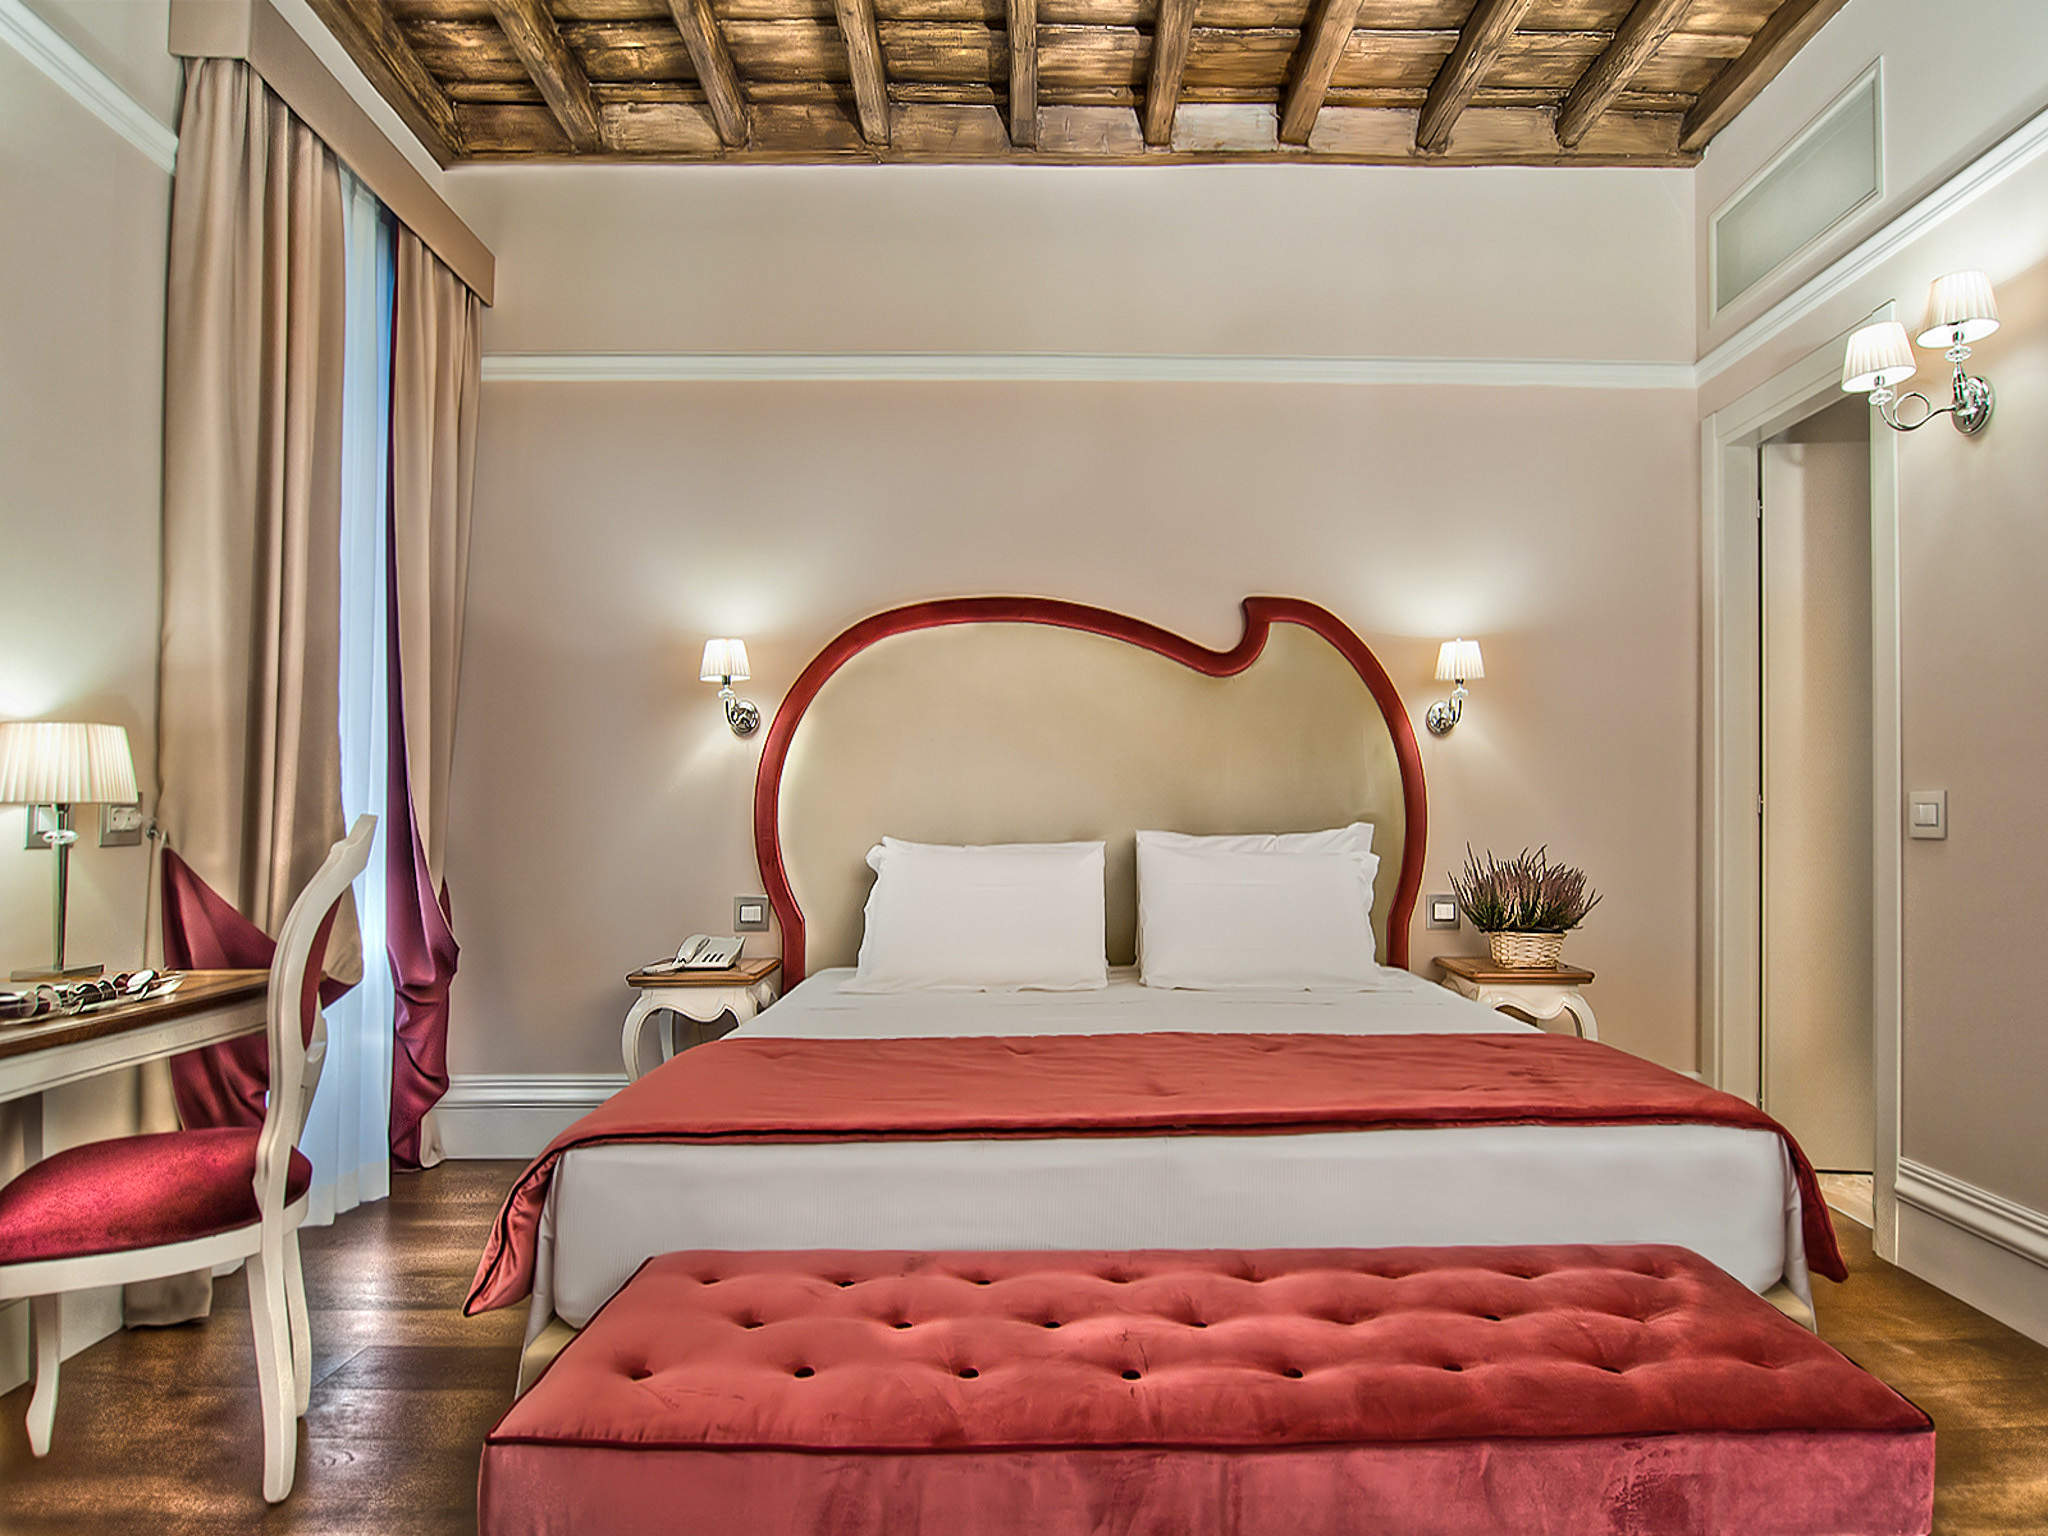 INFINITY HOTEL Roma suite